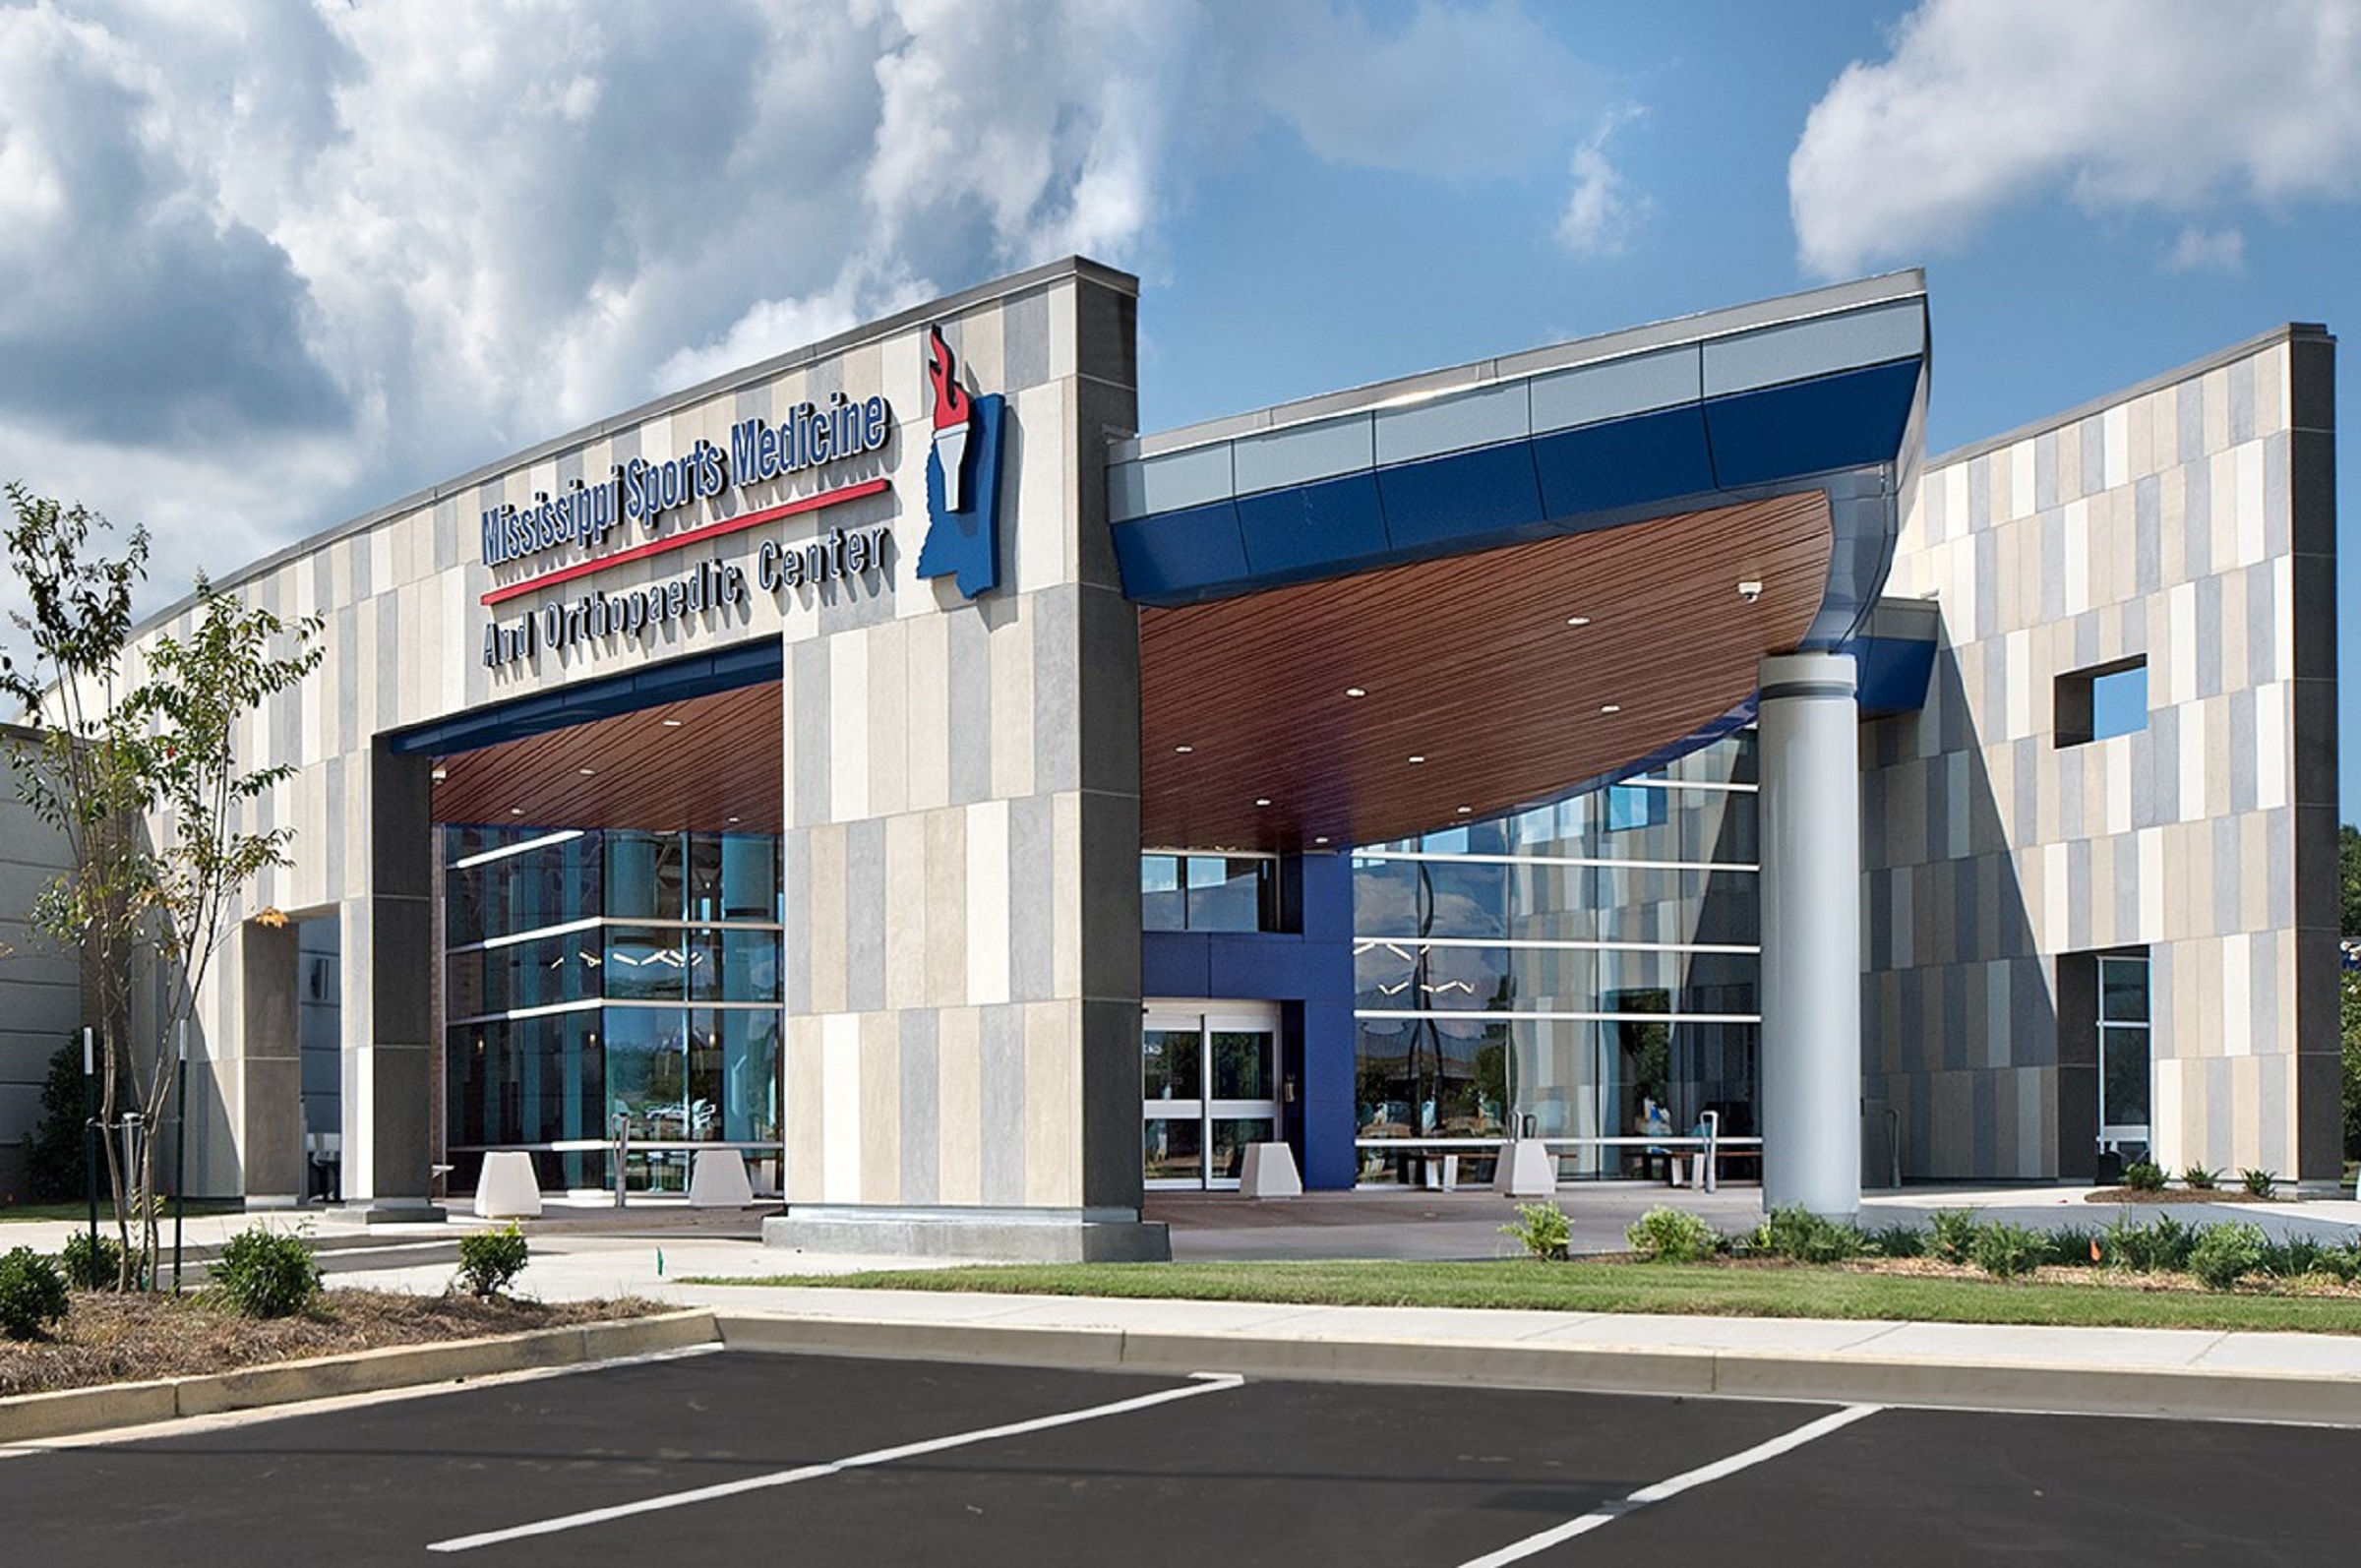 Mississippi Sports Medicine And Orthopedic Center - Hoar Construction